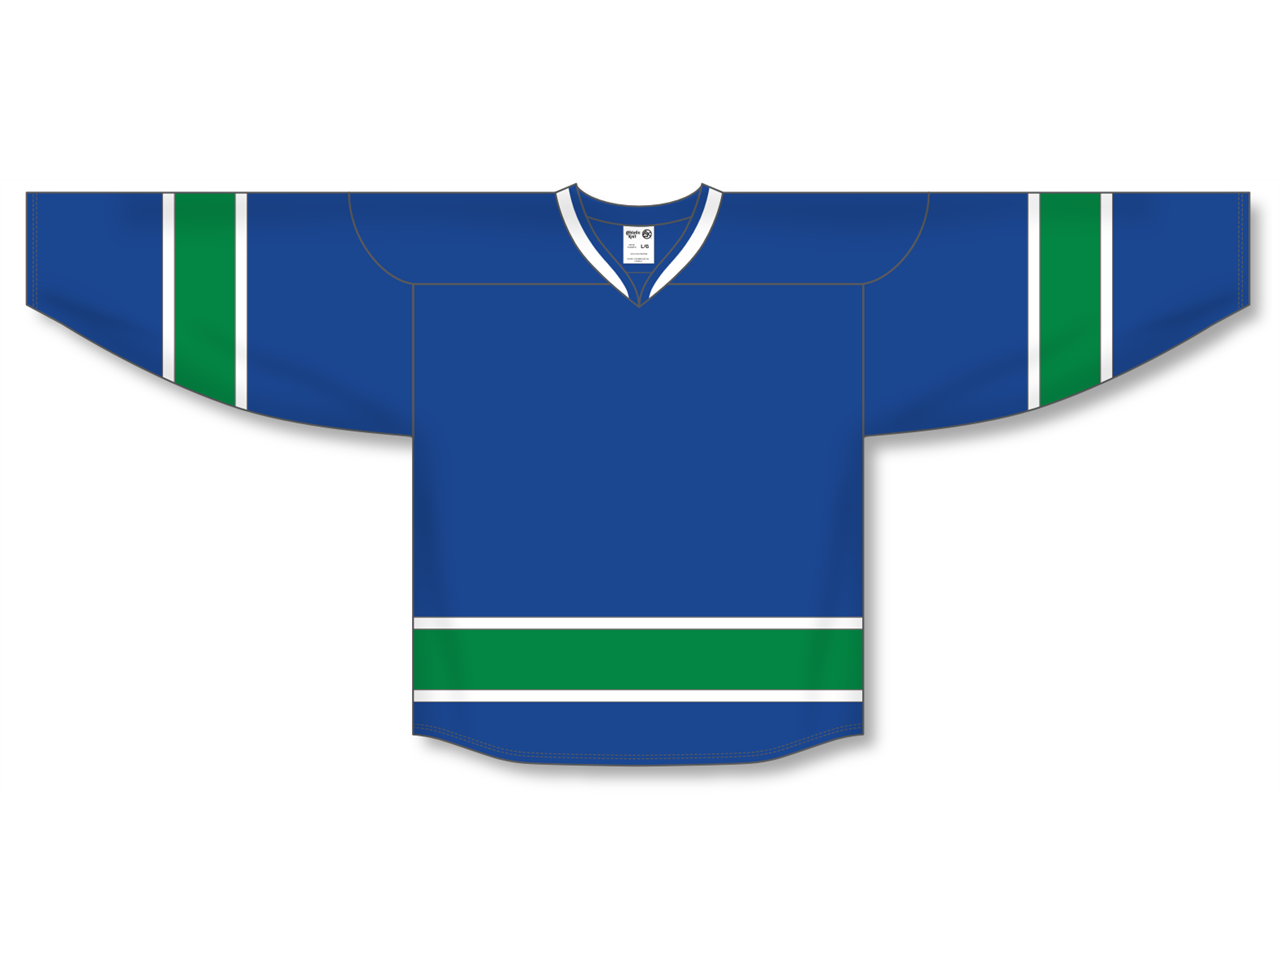 replica hockey jersey